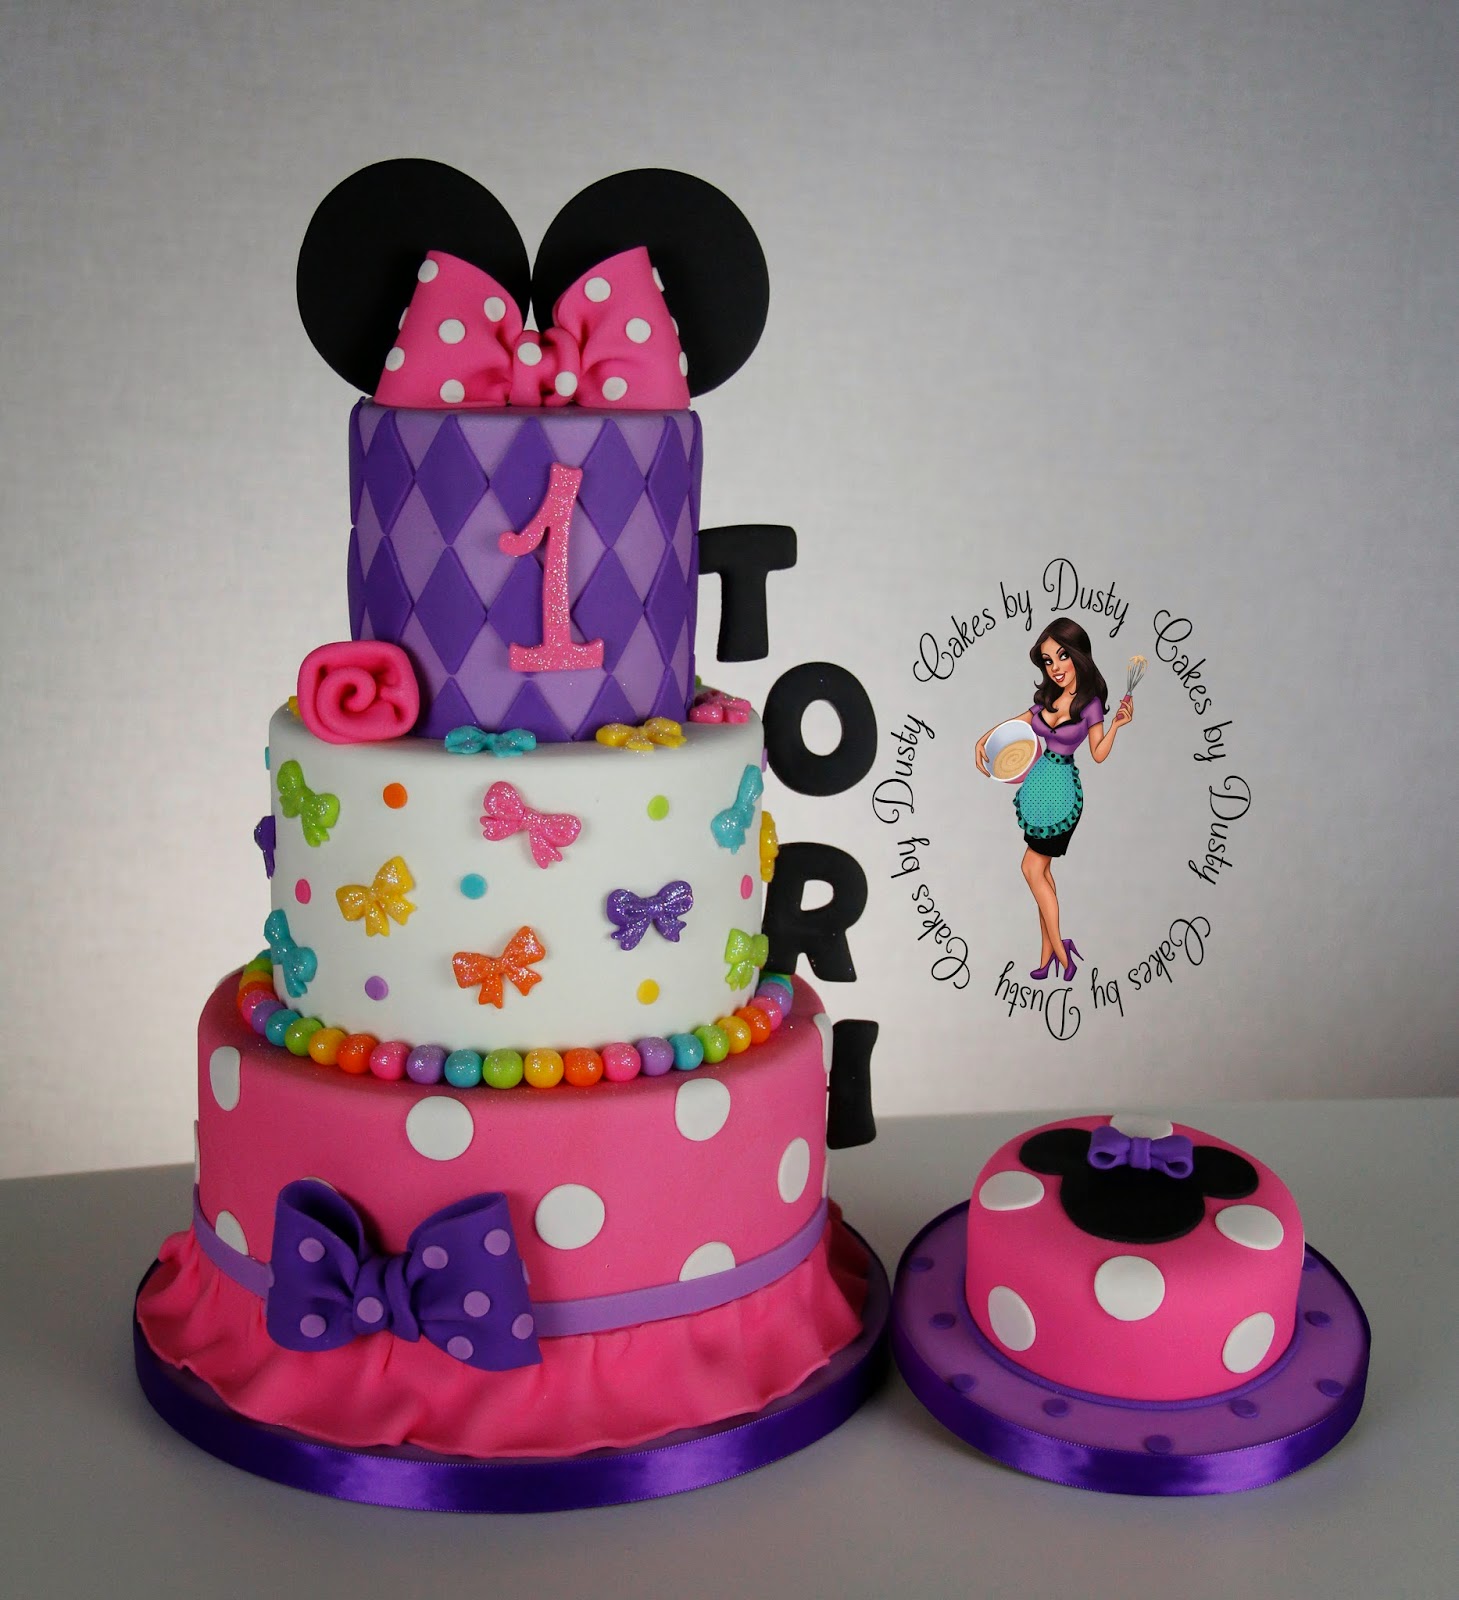 Cakes by Dusty: Tori's 1st Birthday Cake